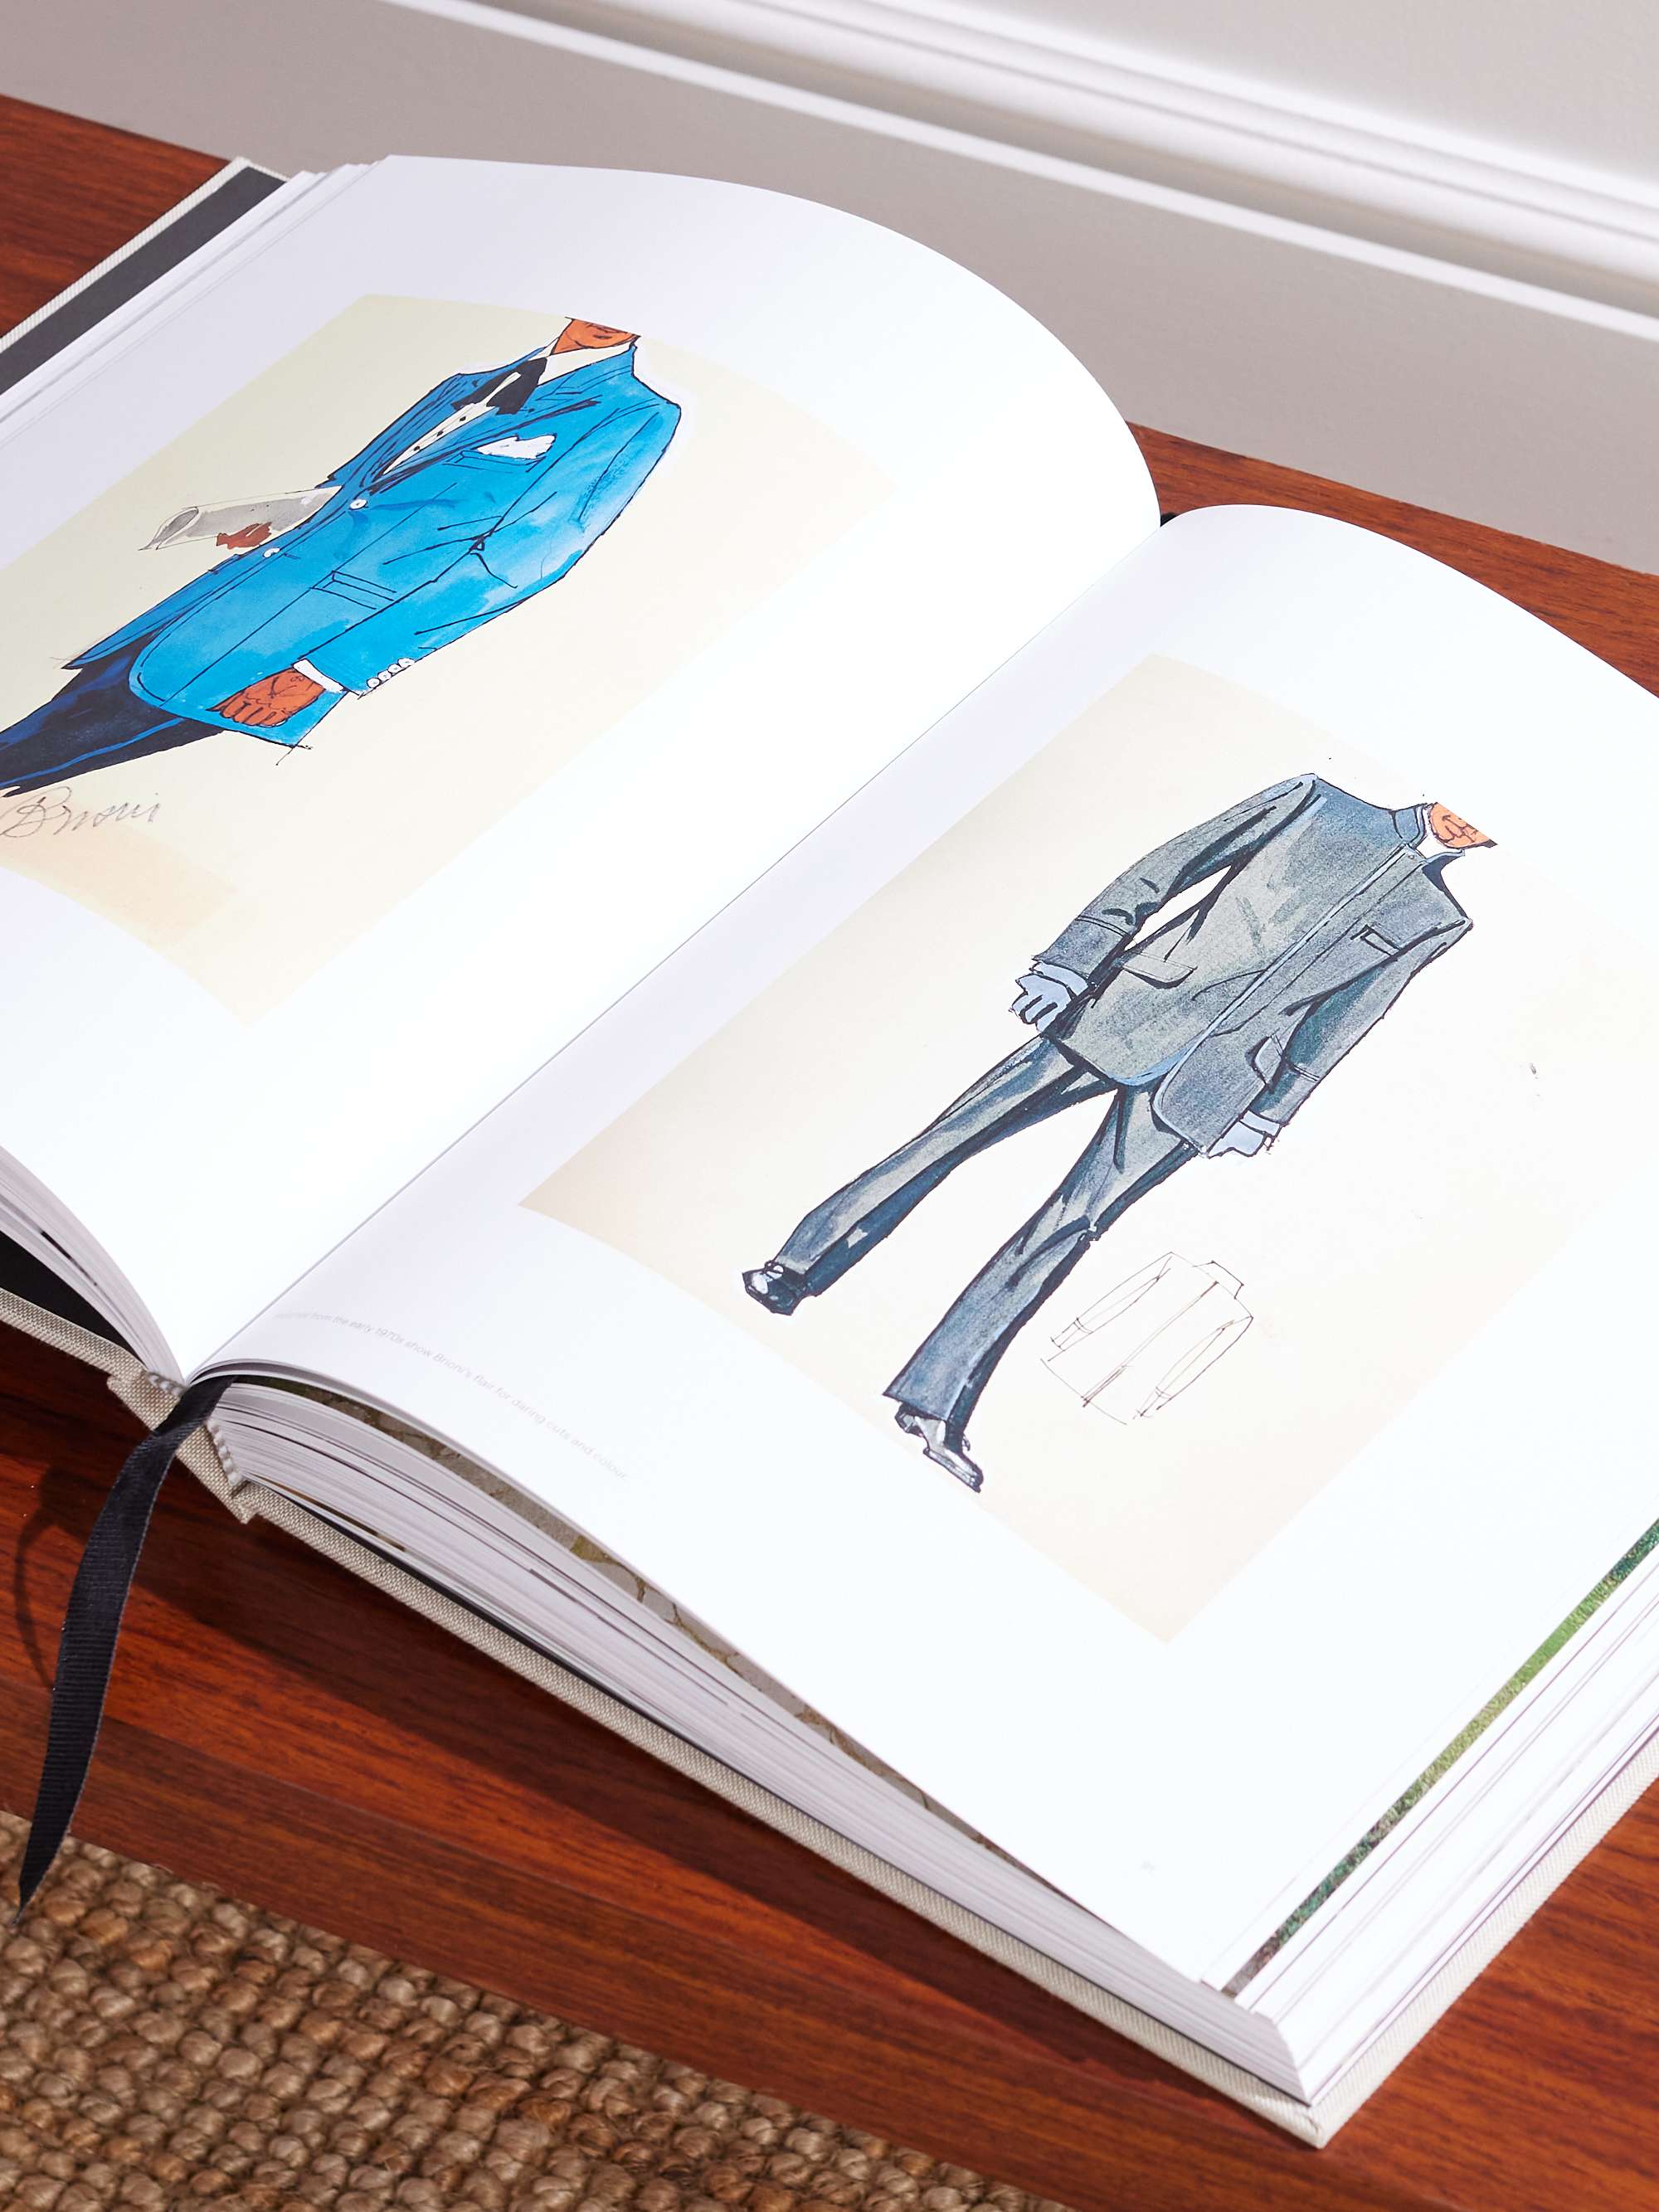 ASSOULINE Brioni Tailoring Legends Hardcover Book